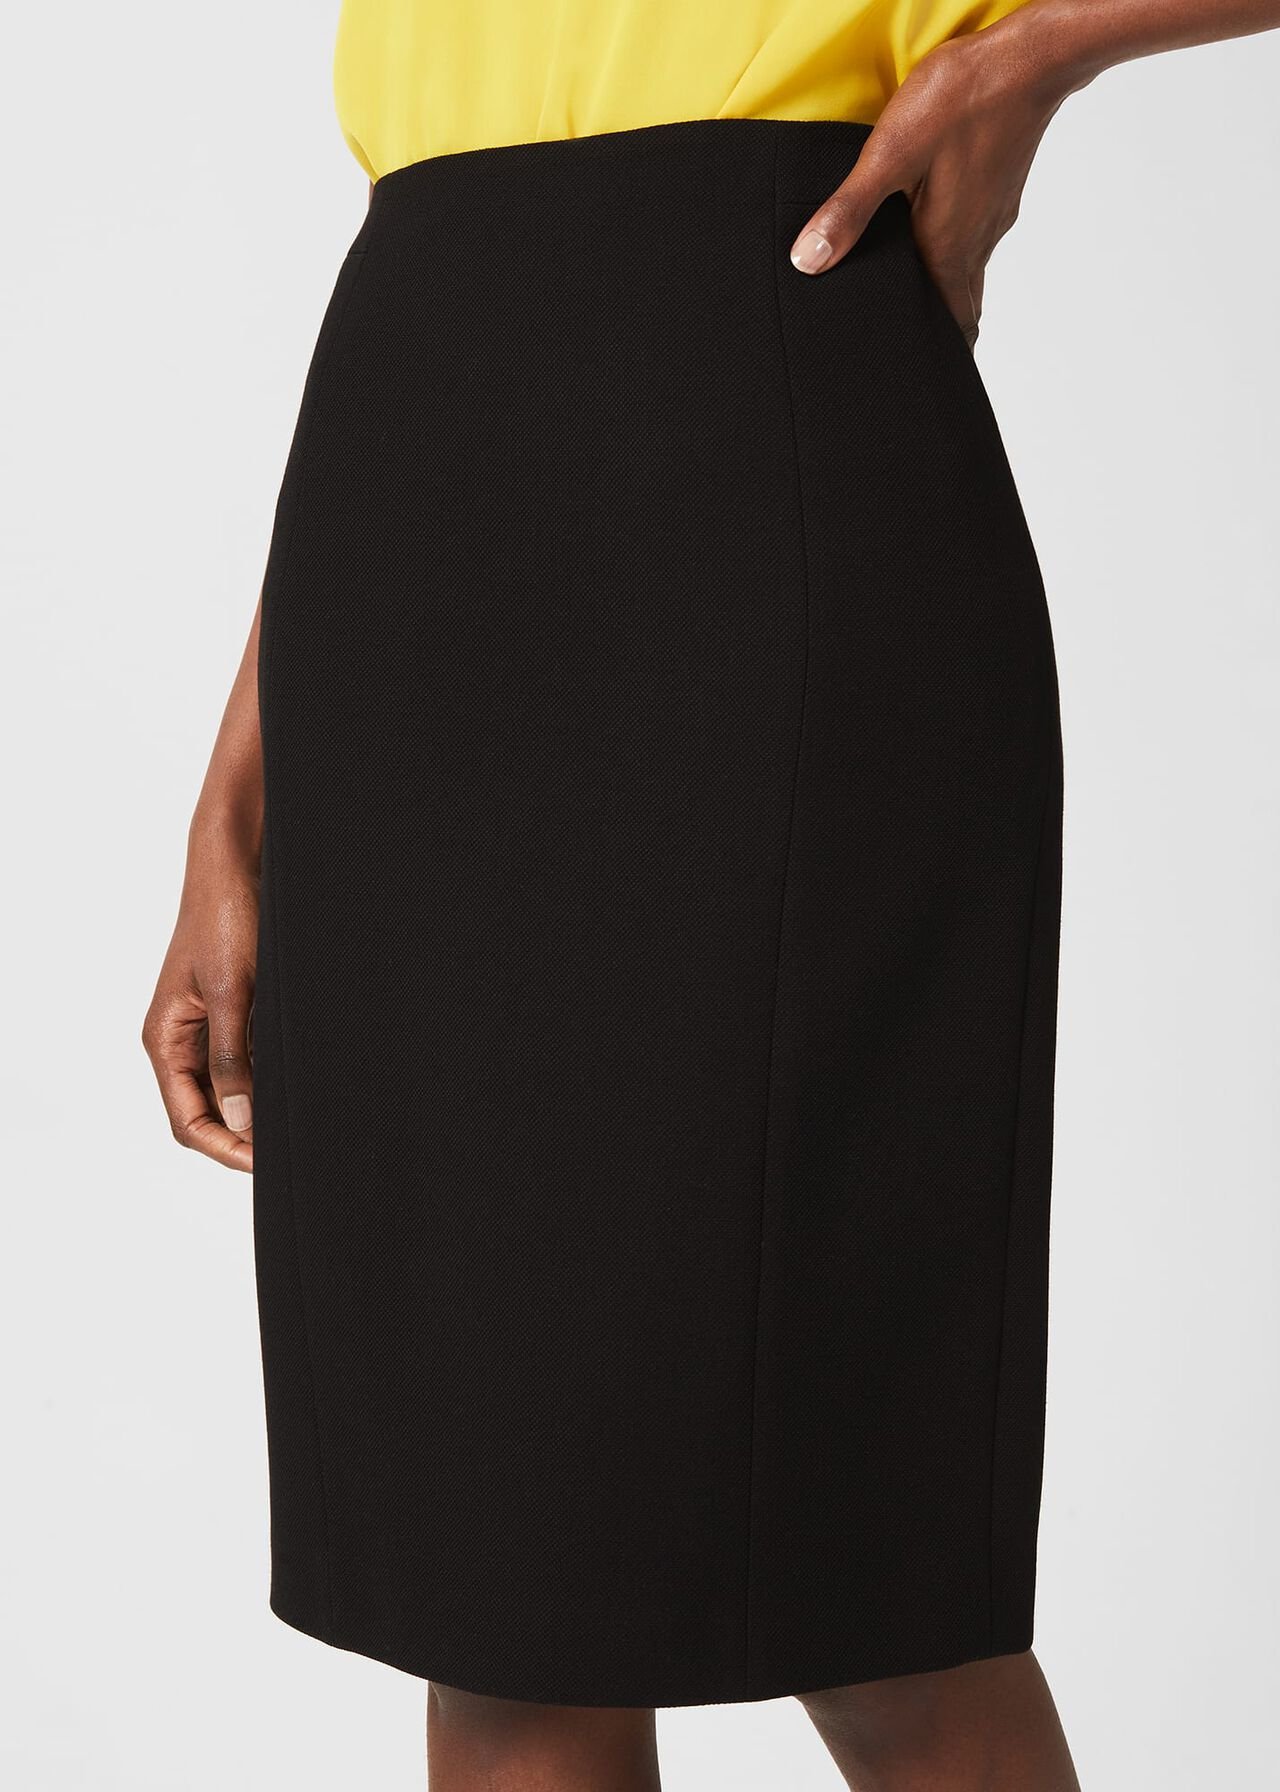 Ophelia Skirt, Black, hi-res